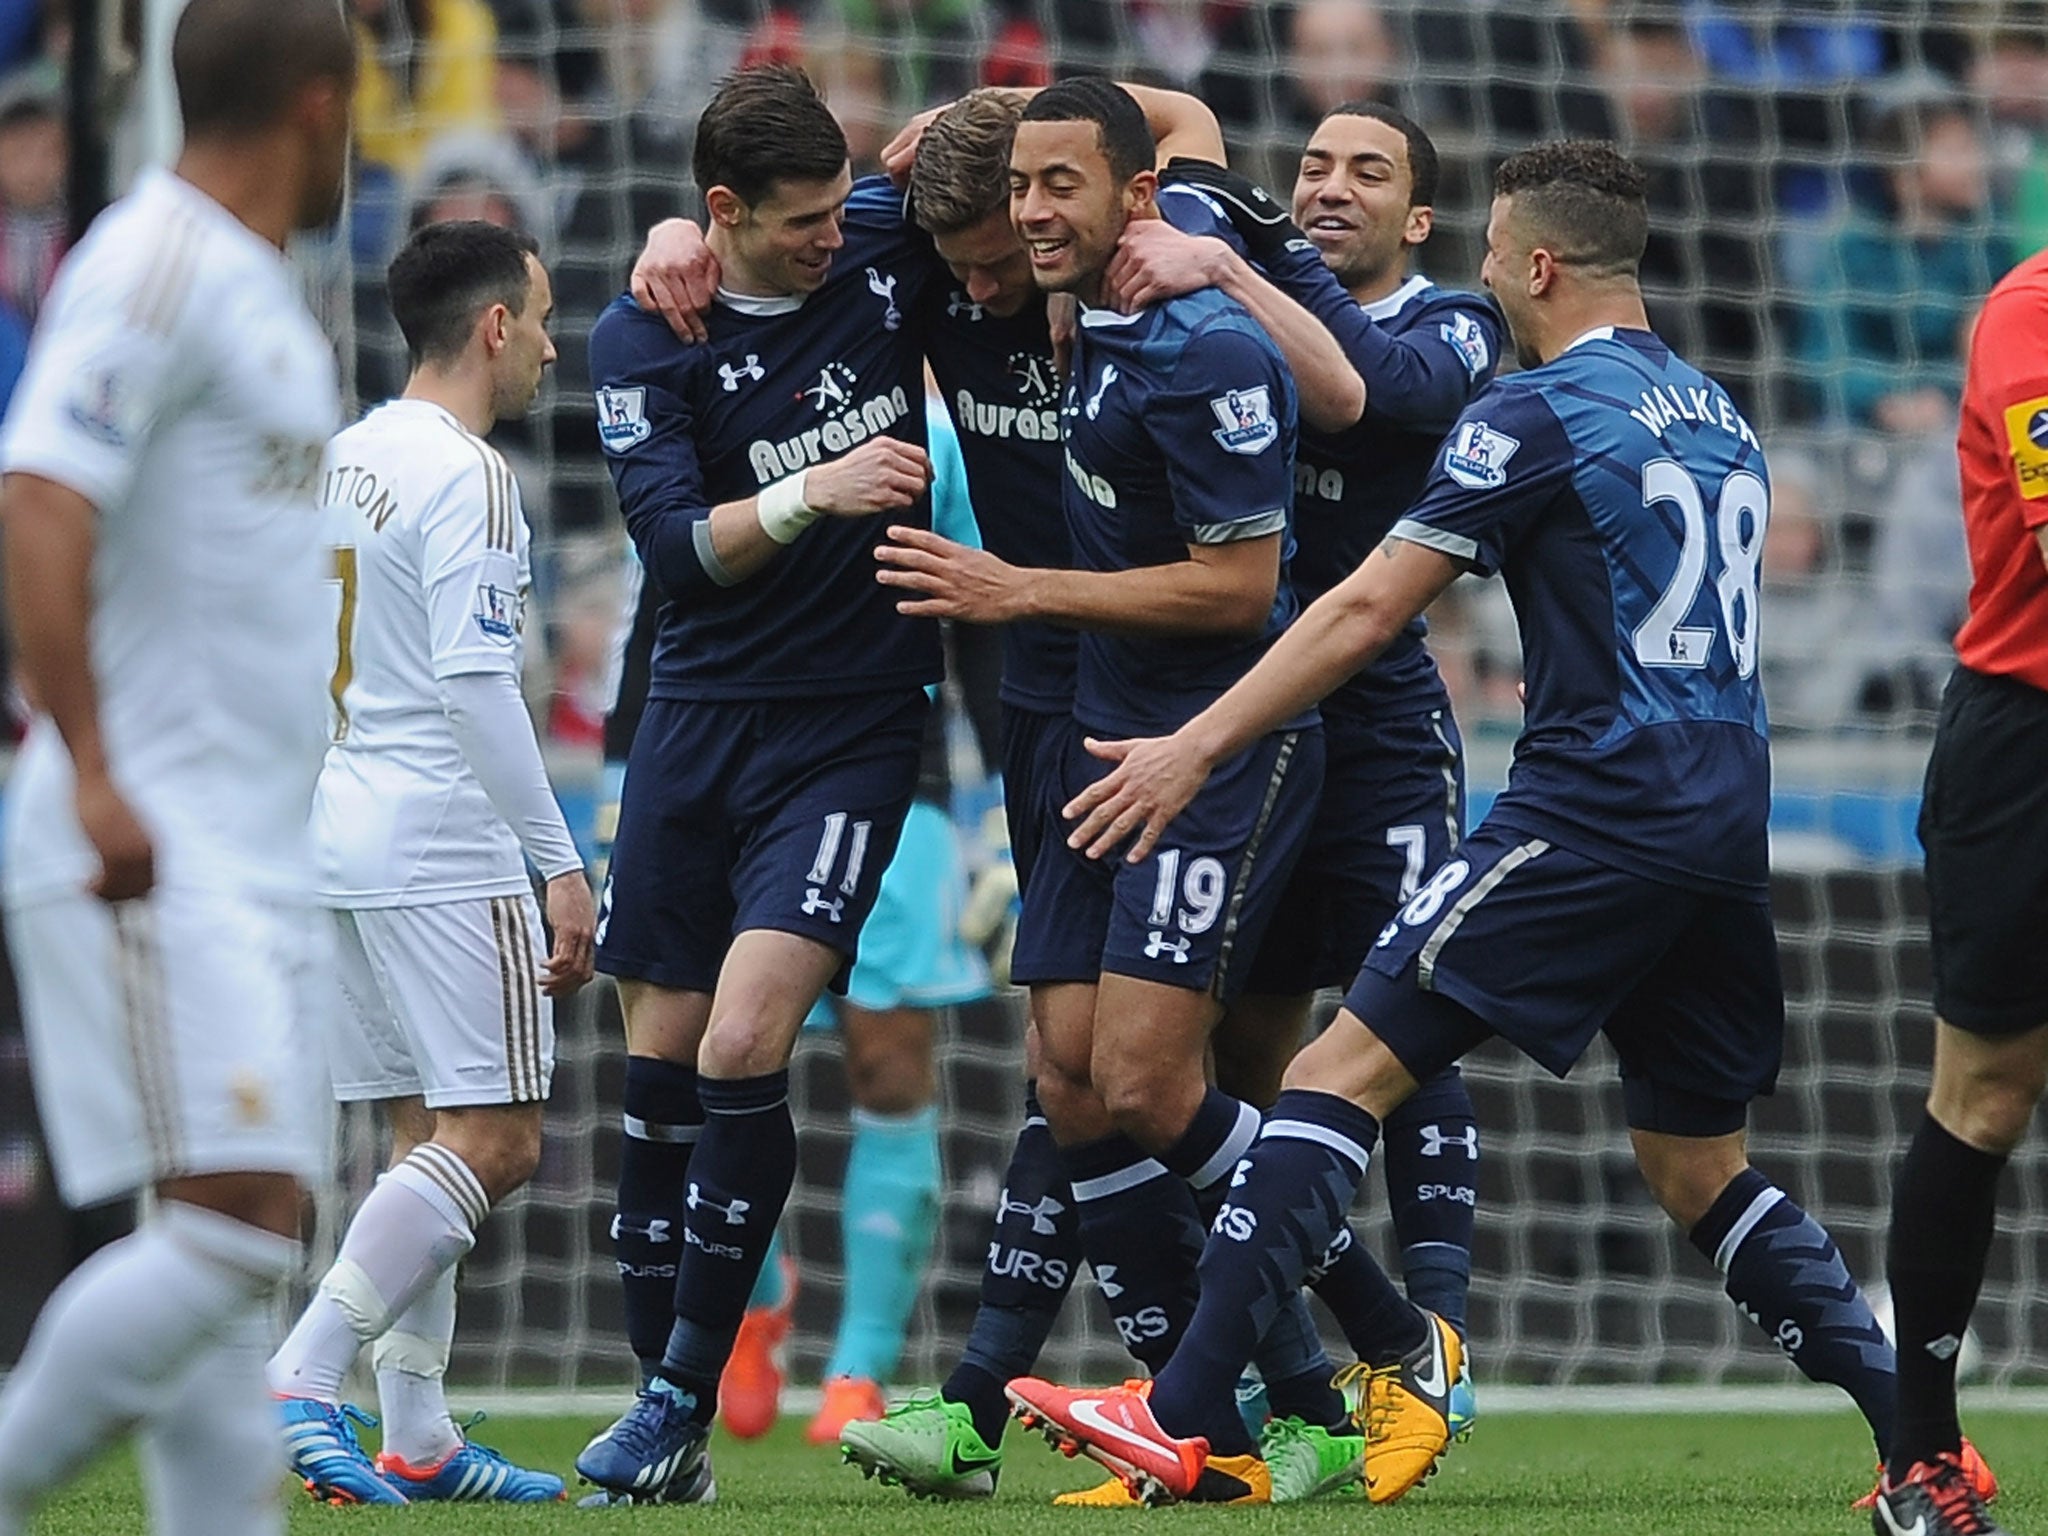 Jan Vertonghen of Tottenham celebrates with team-mates after scoring their first goal